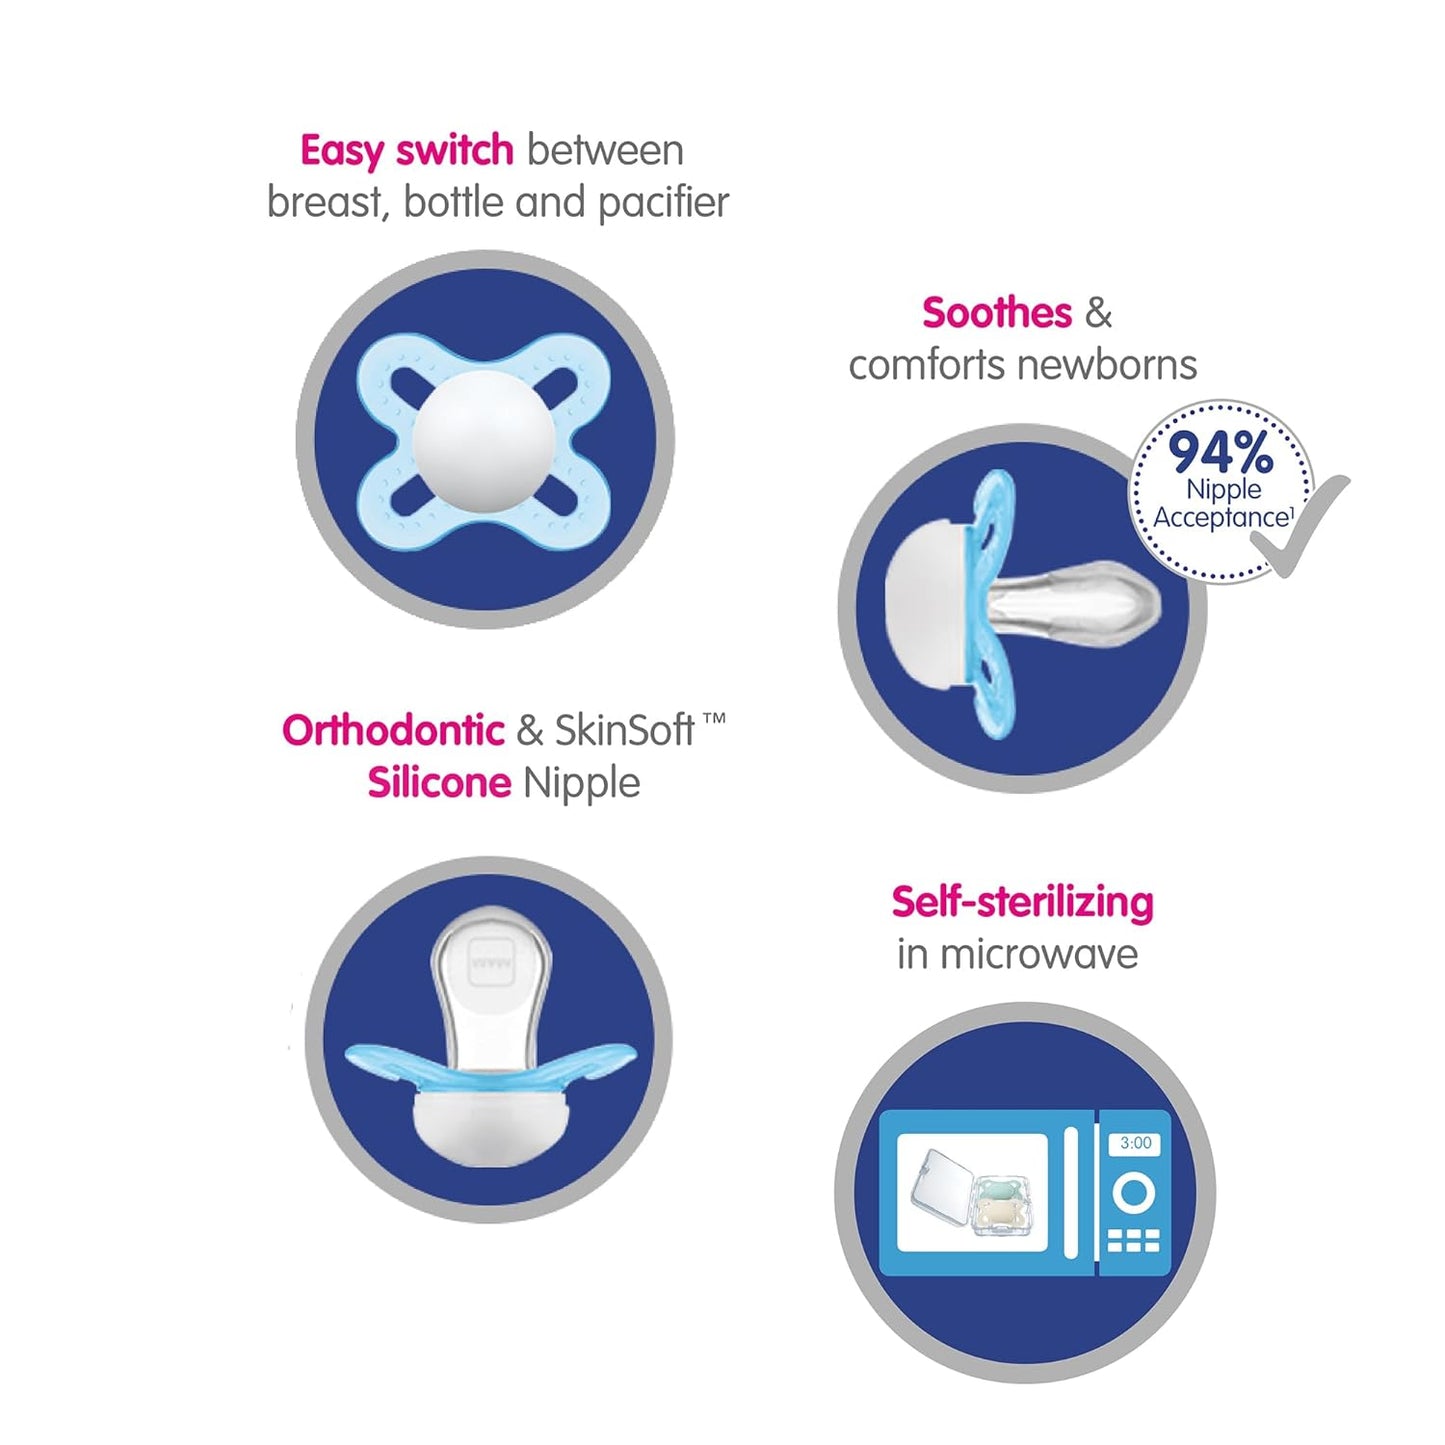 MAM Original Matte Baby Pacifier, Nipple Shape Helps Promote Healthy Oral Development, Sterilizer Case, 2 Pack, 0-6 Months, Unisex,2 Count (Pack of 1)